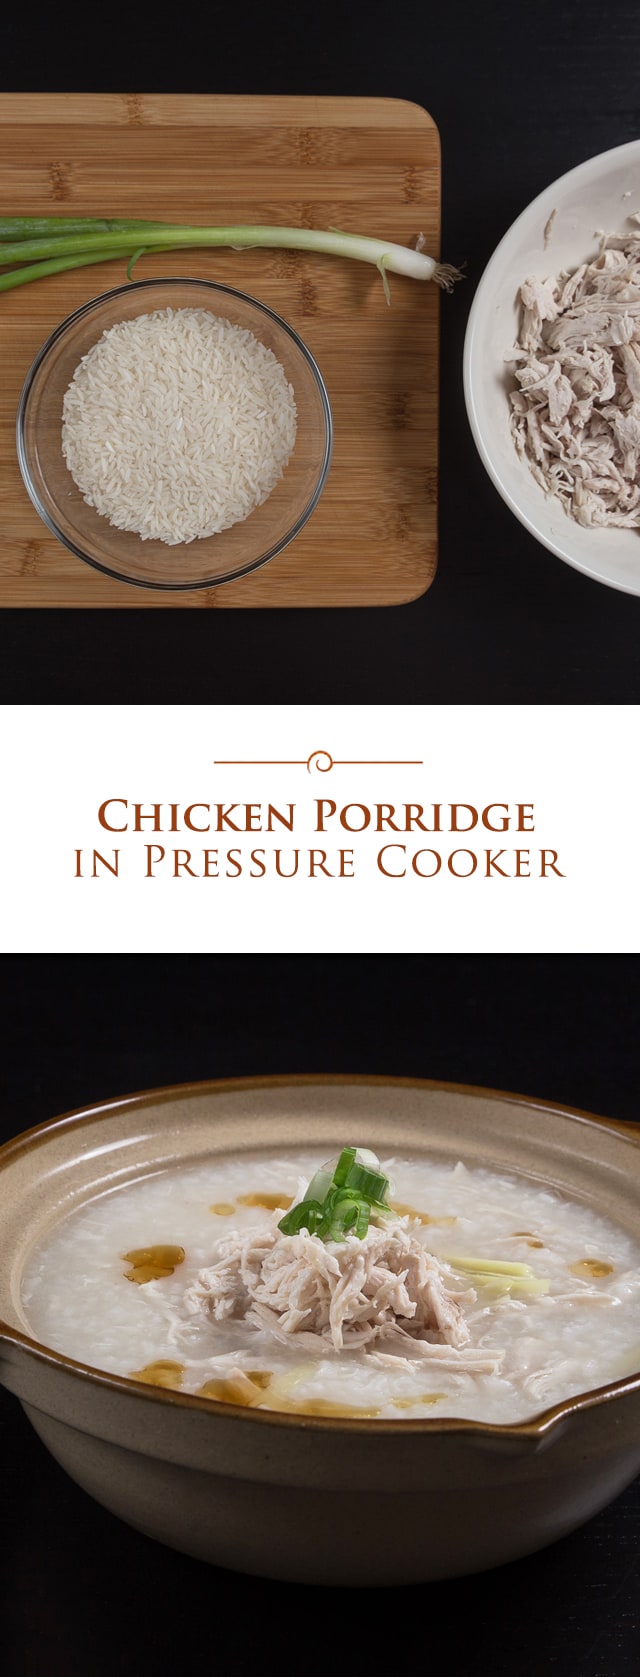 Pressure Cooker Chicken Porridge photo collage